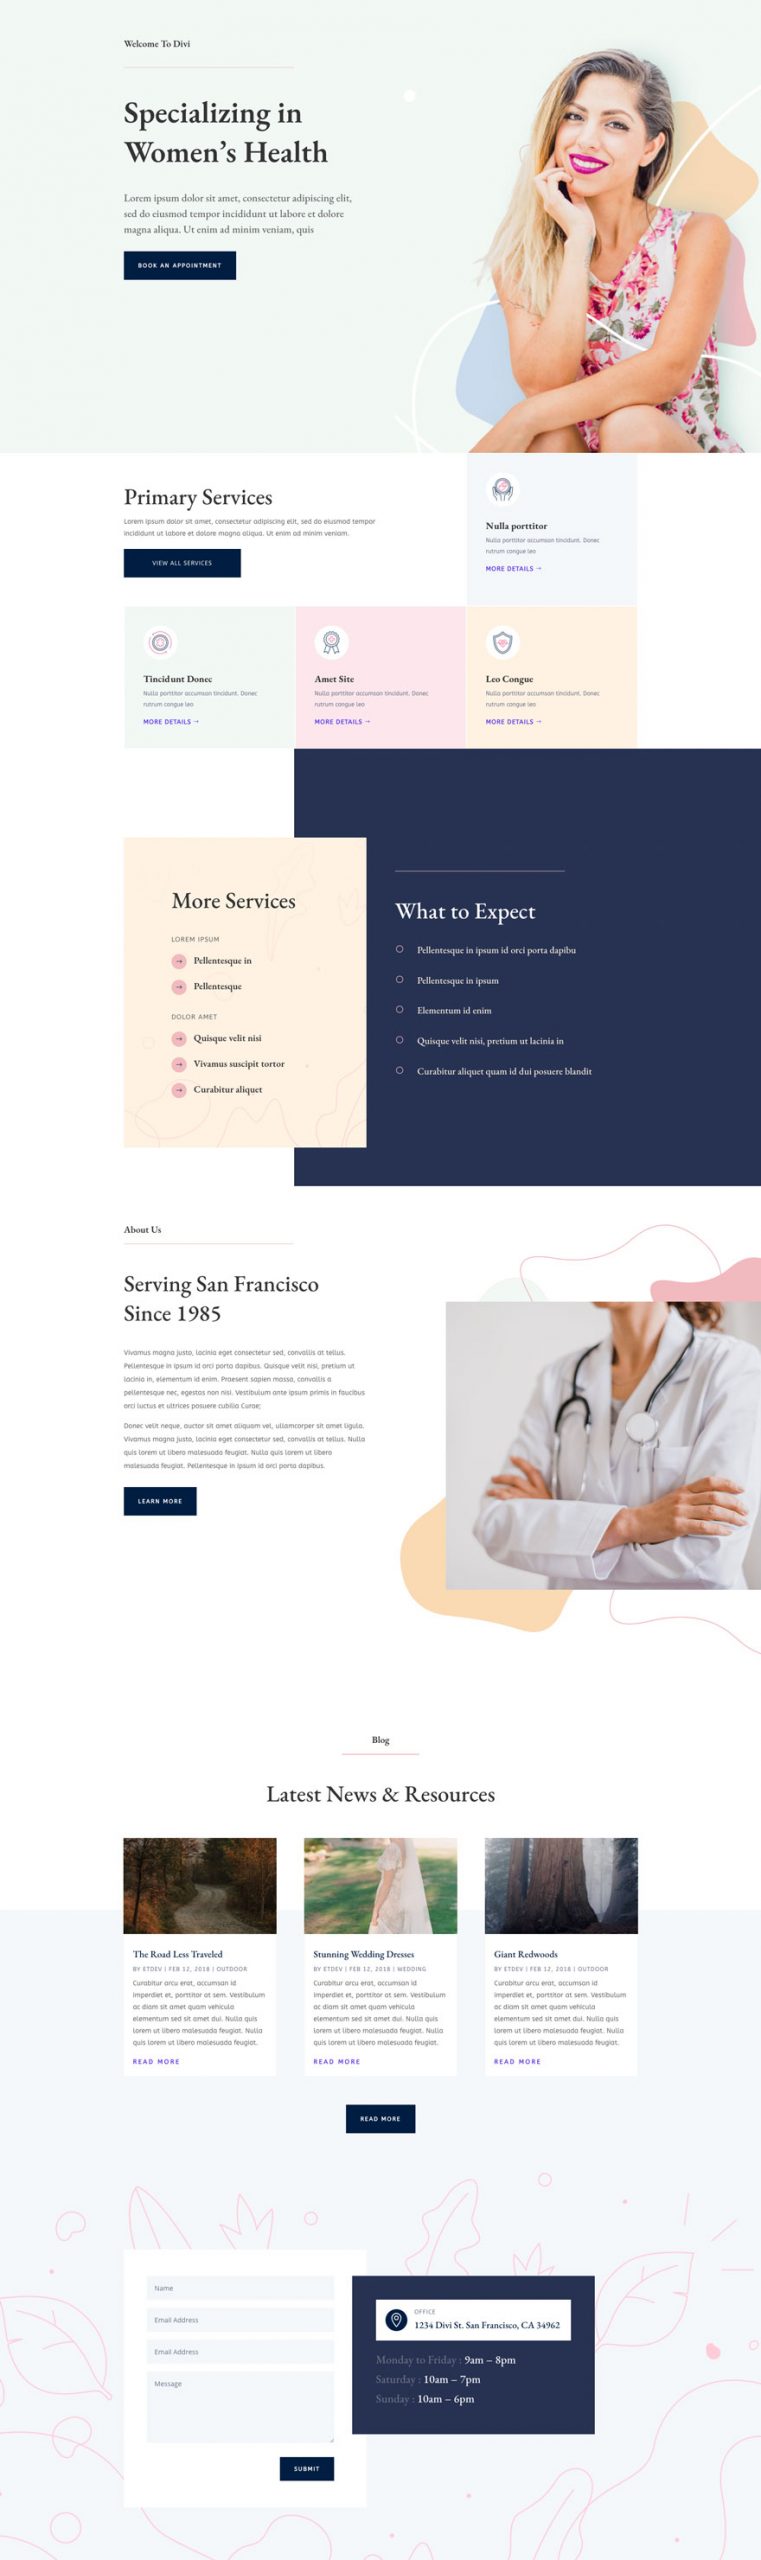 women's health center website